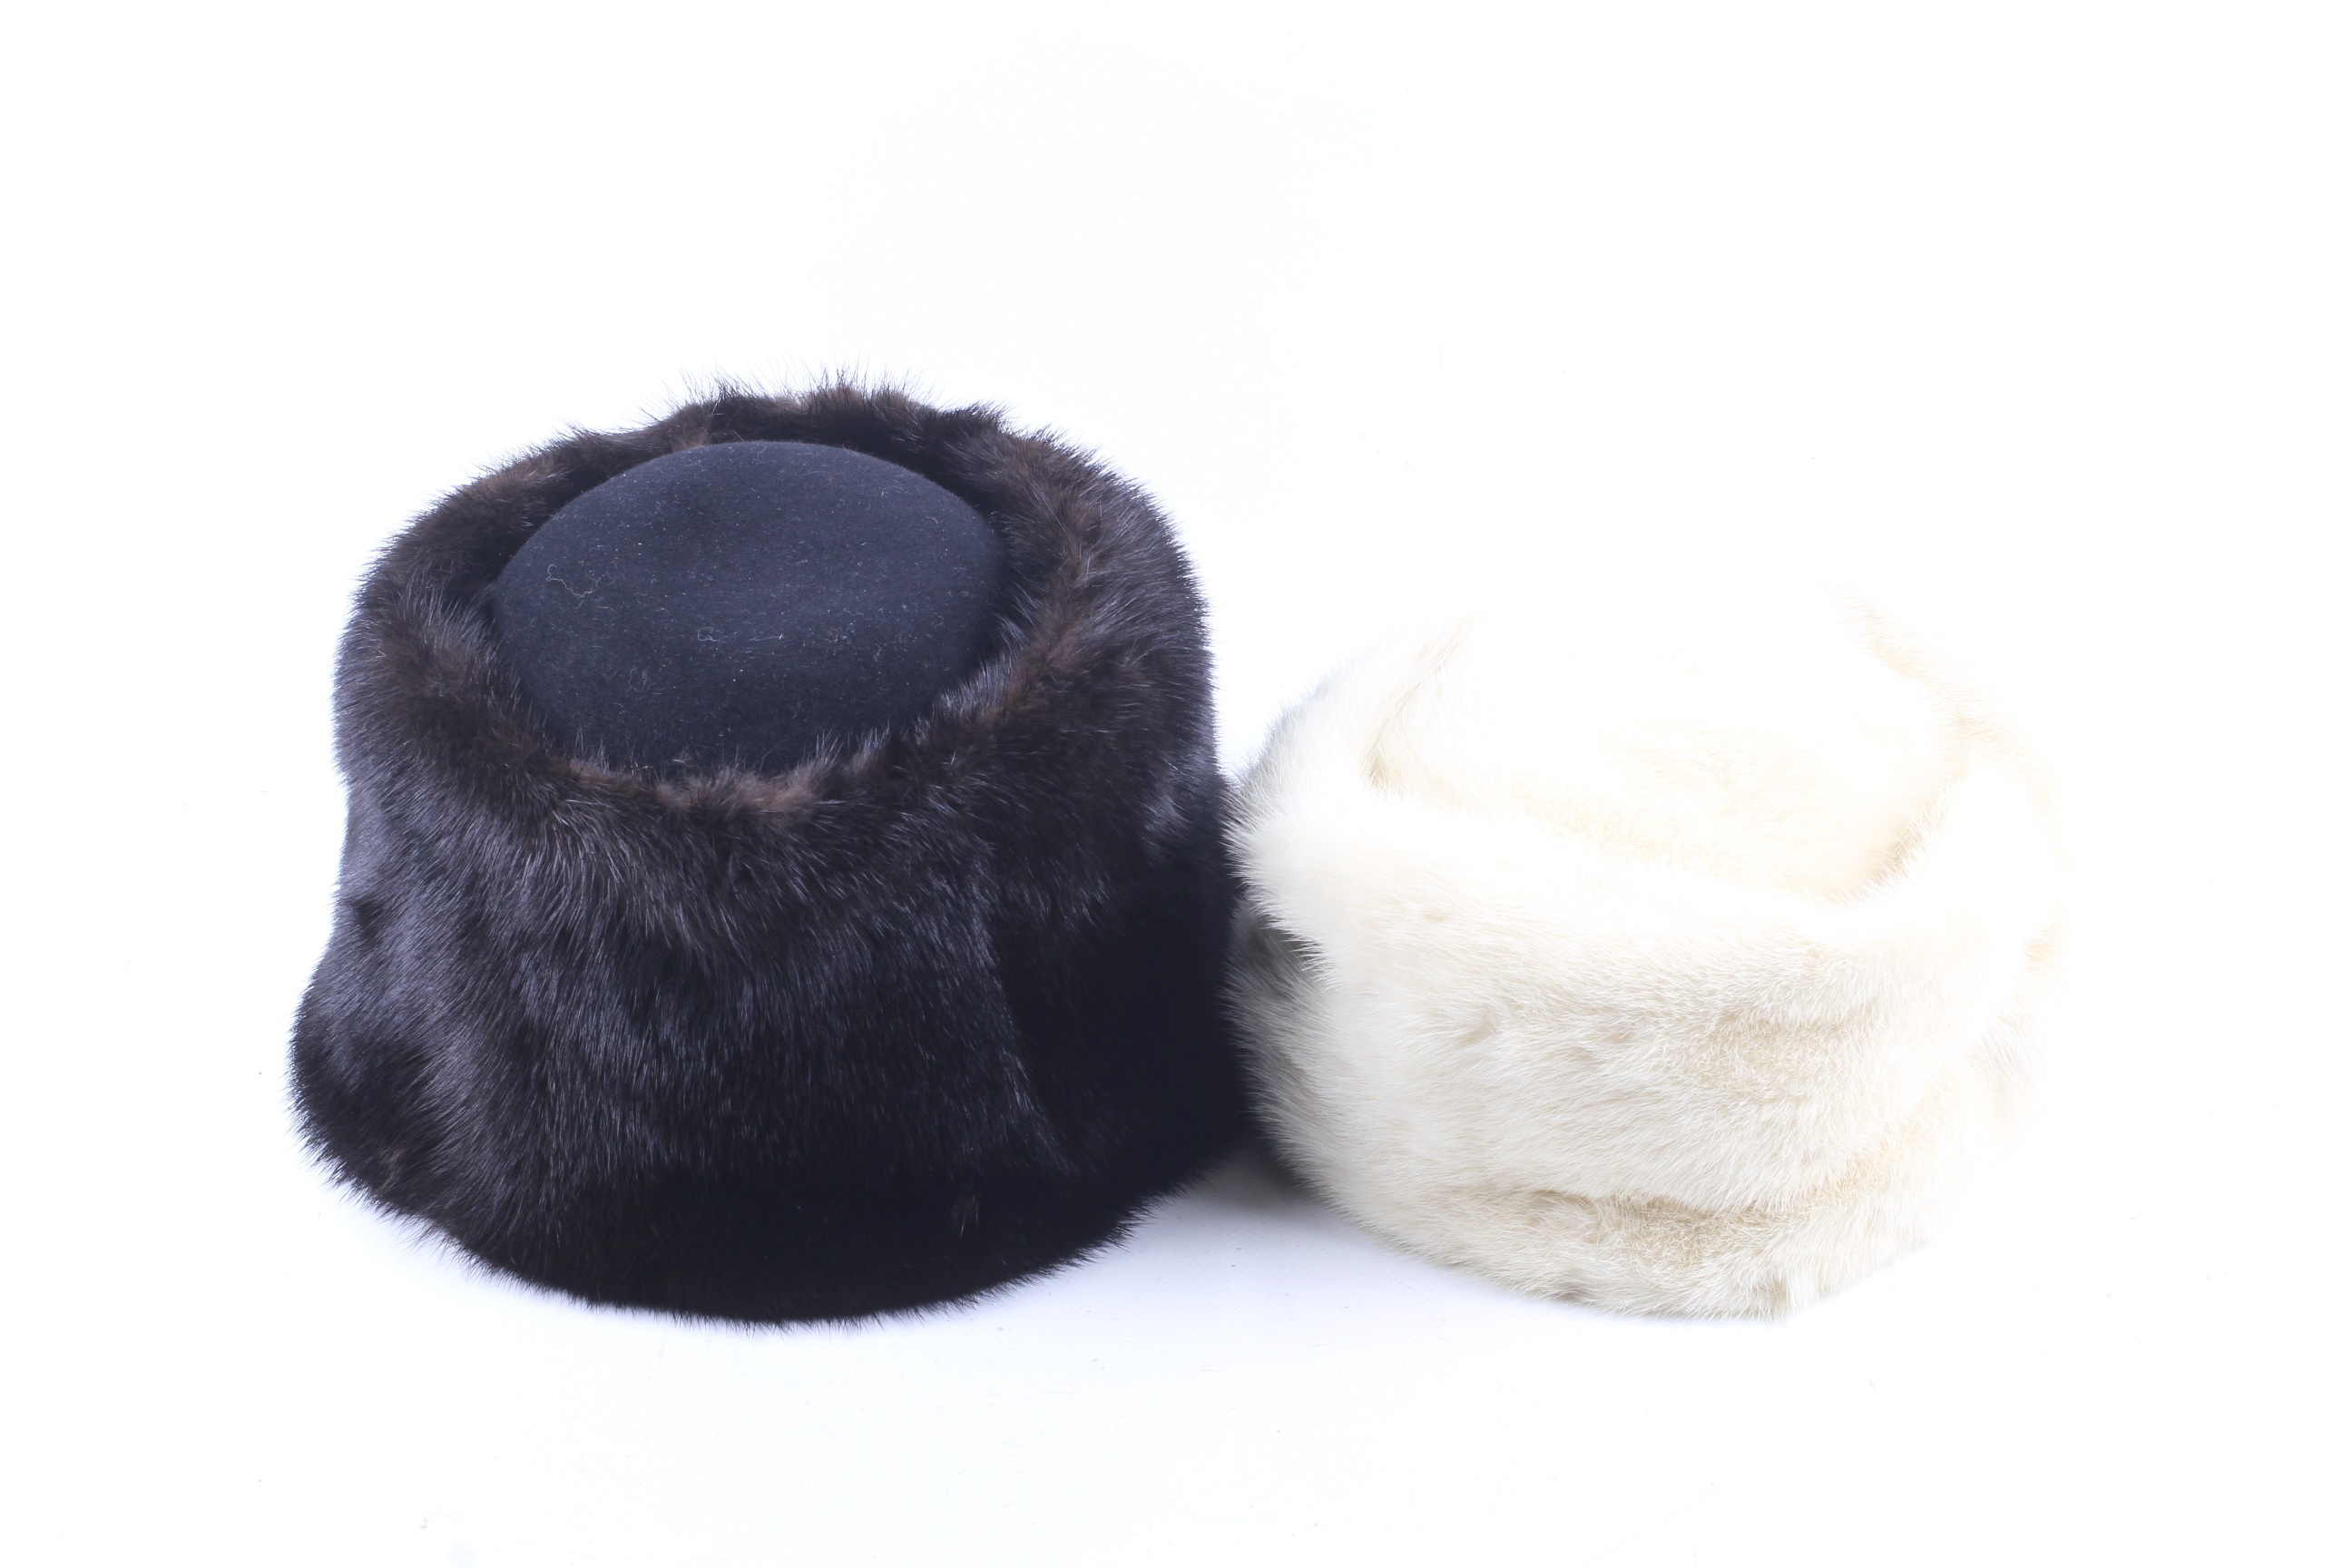 Two Philip Somerville vintage lady's vintage fur hats.